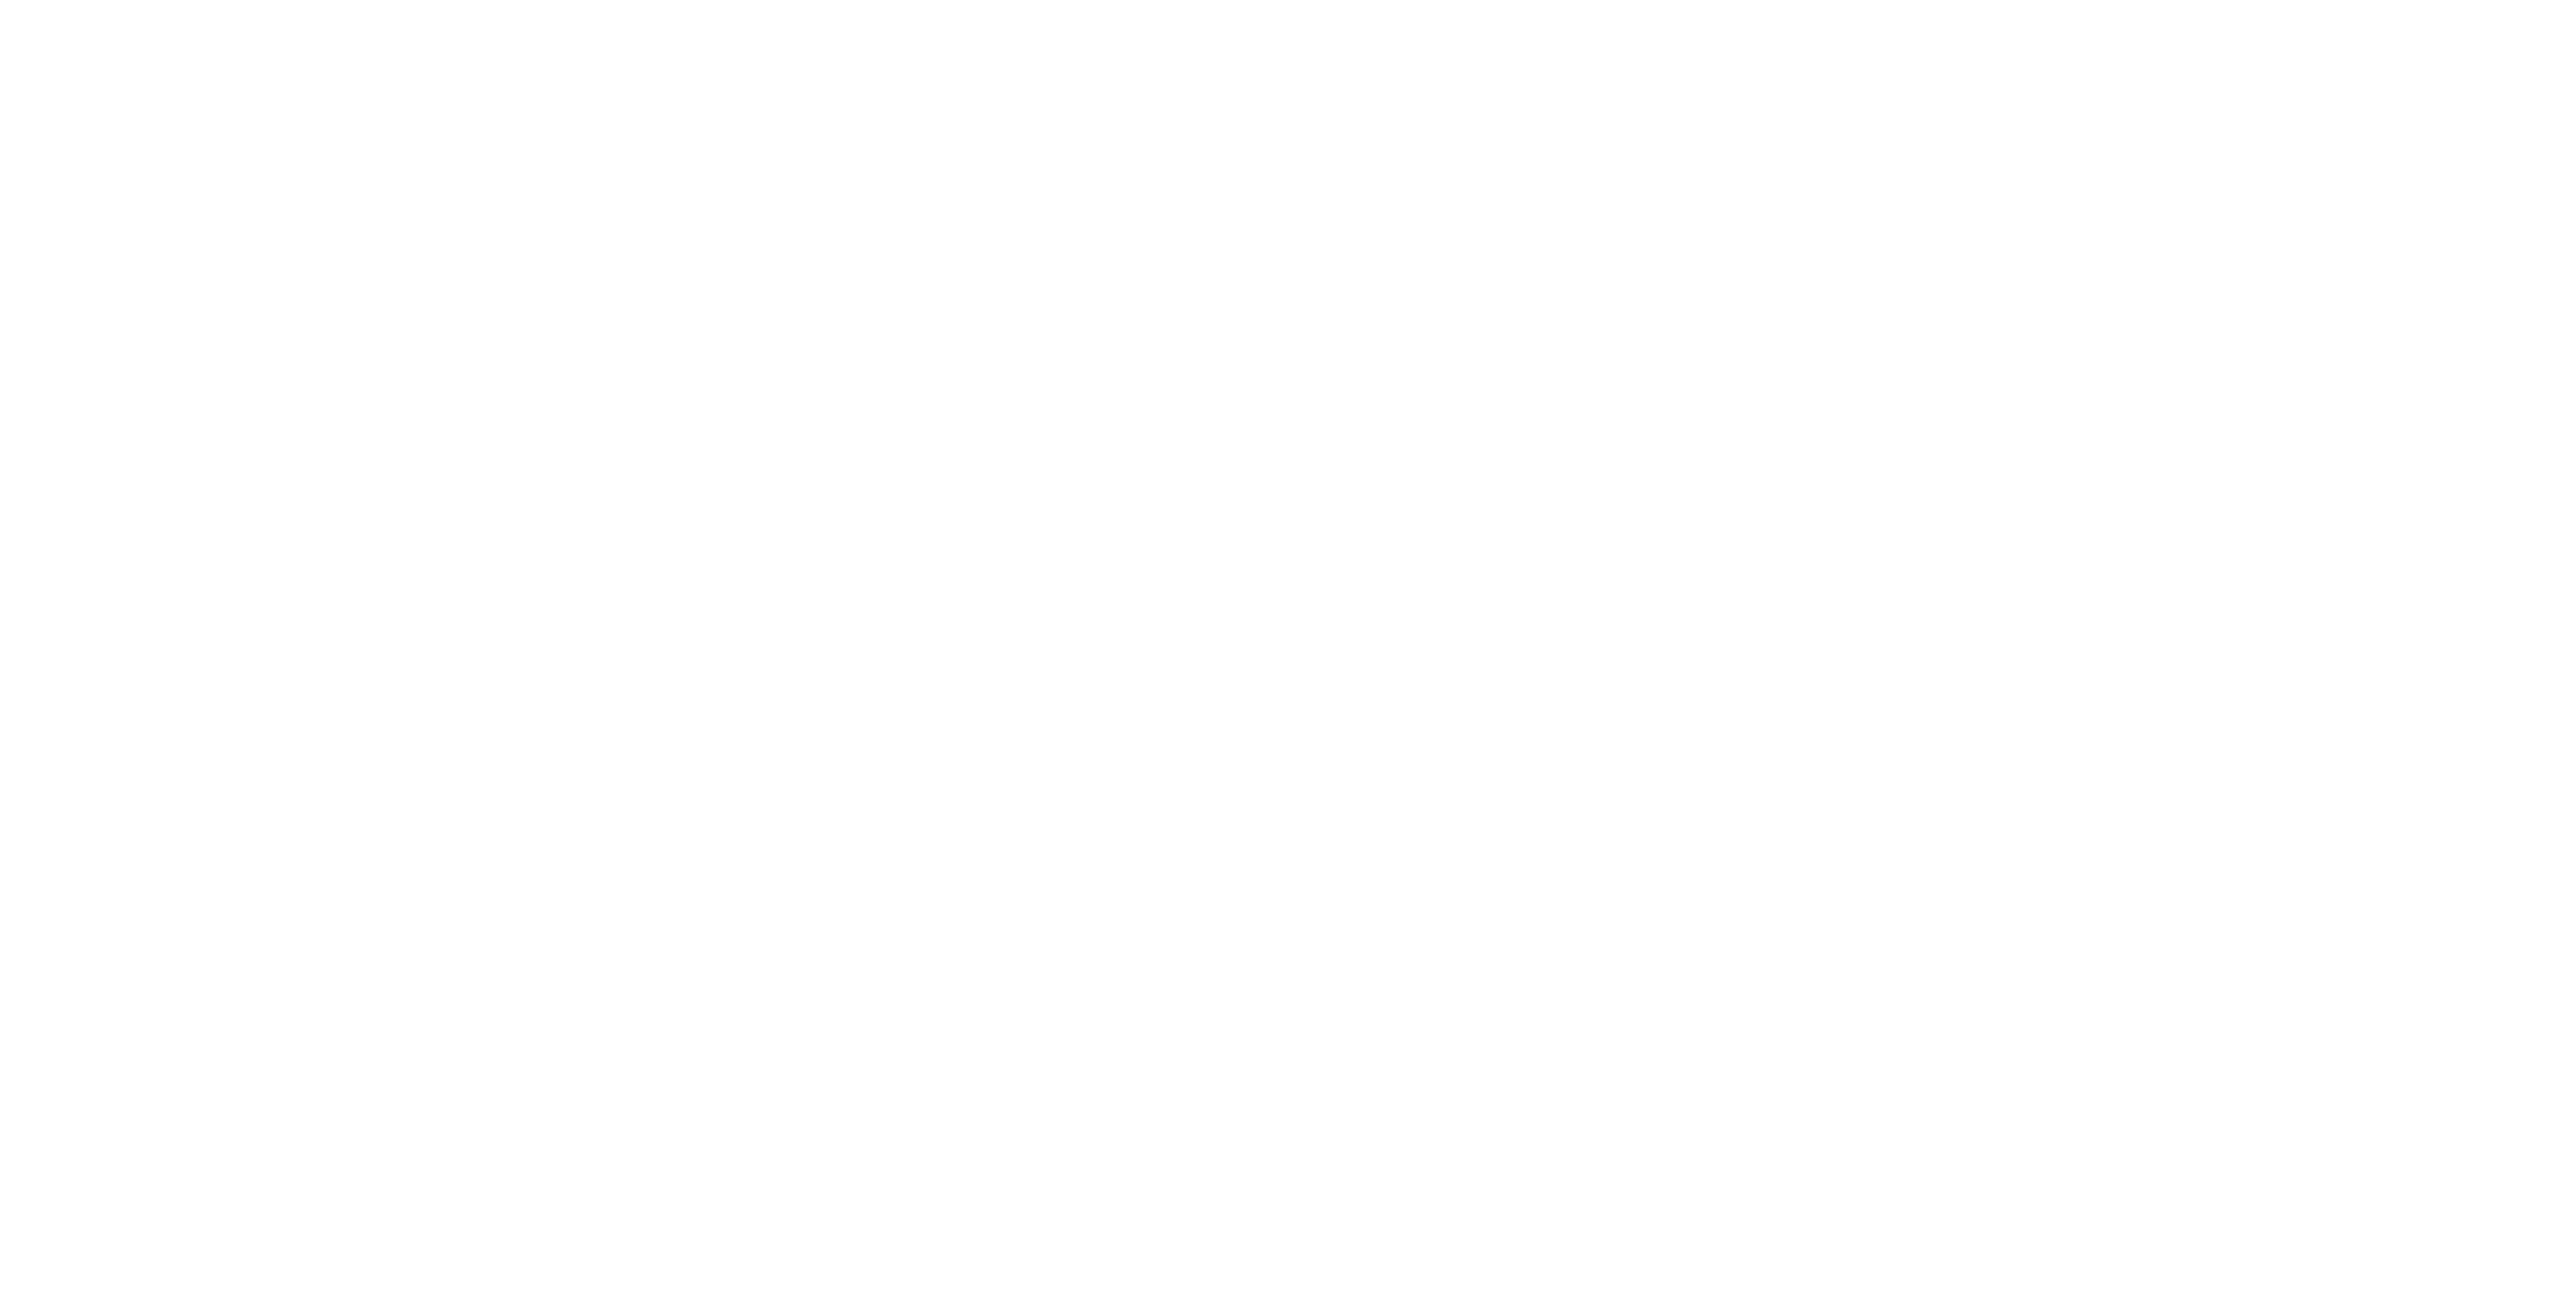 Brown Distributing Logo - Brown Distributing Company